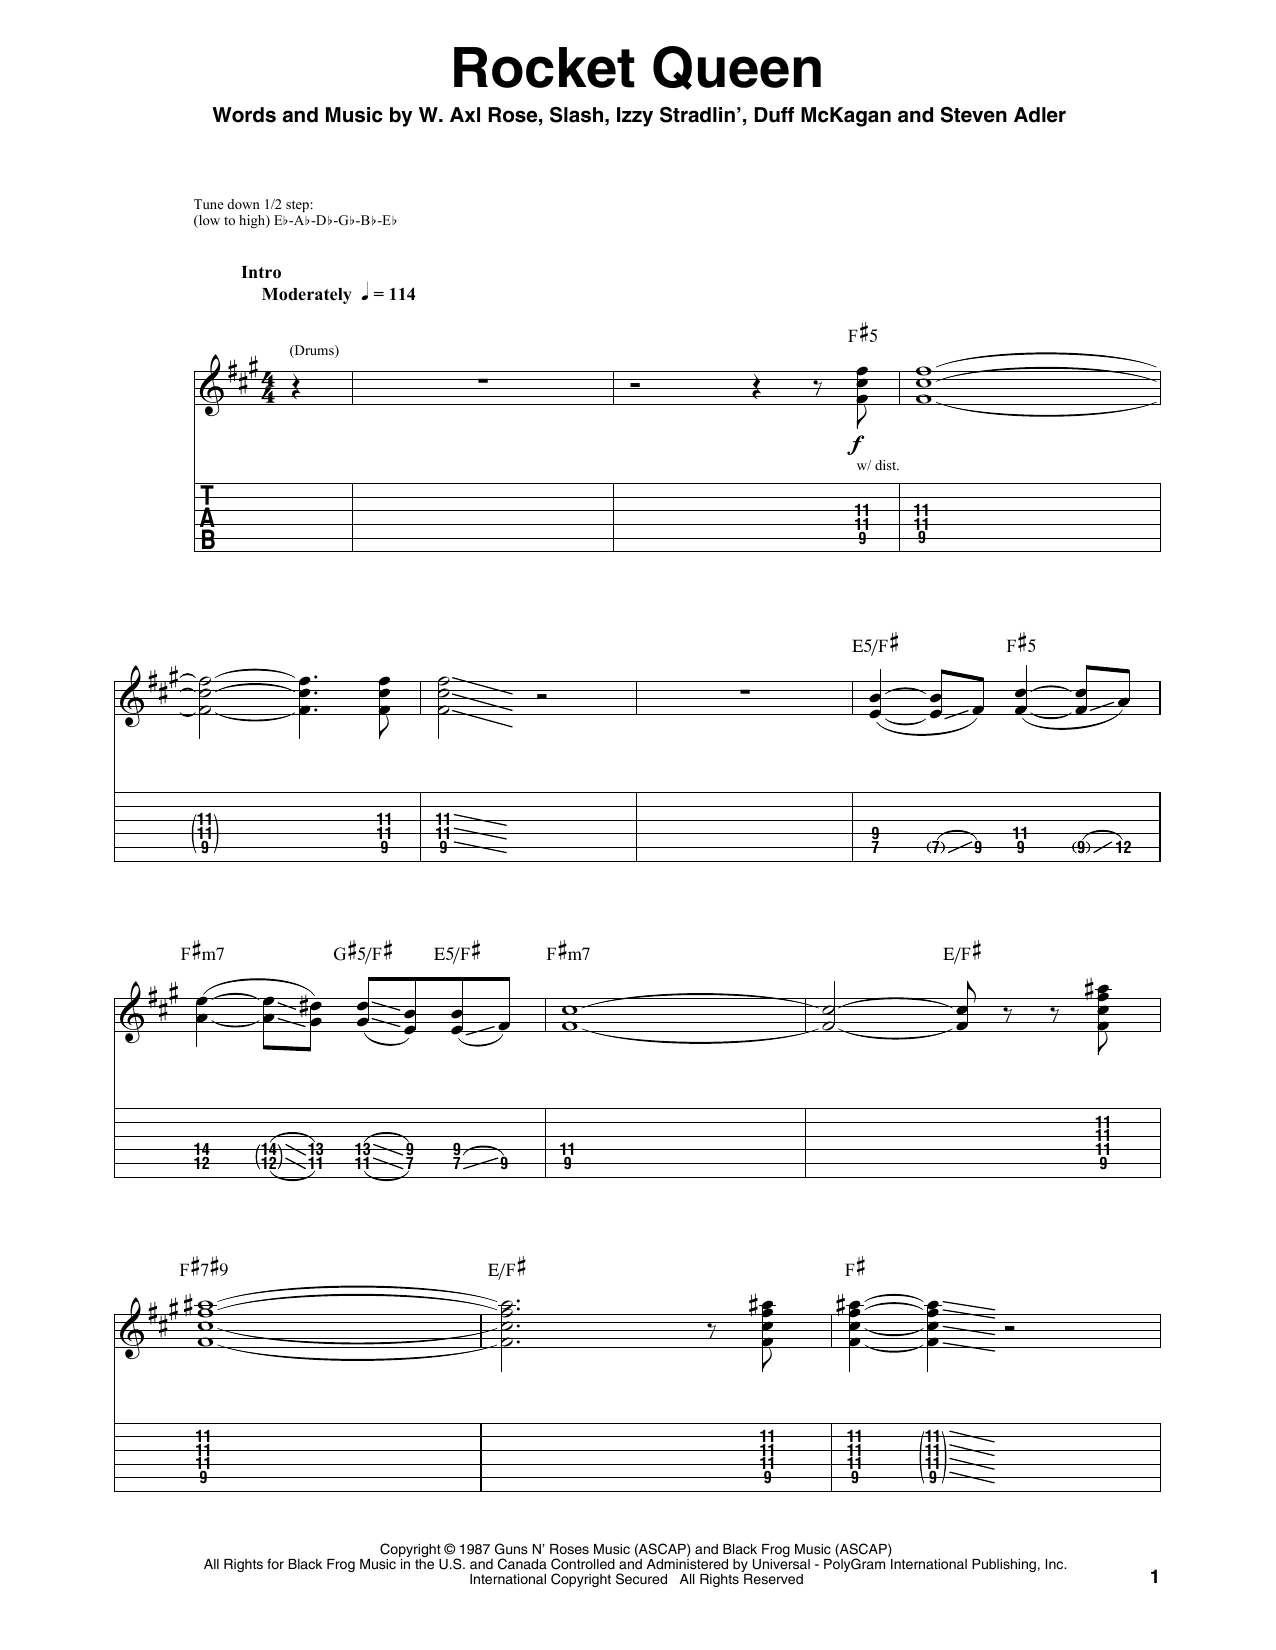 Guns N' Roses Rocket Queen Sheet Music Notes & Chords for Guitar Tab (Single Guitar) - Download or Print PDF